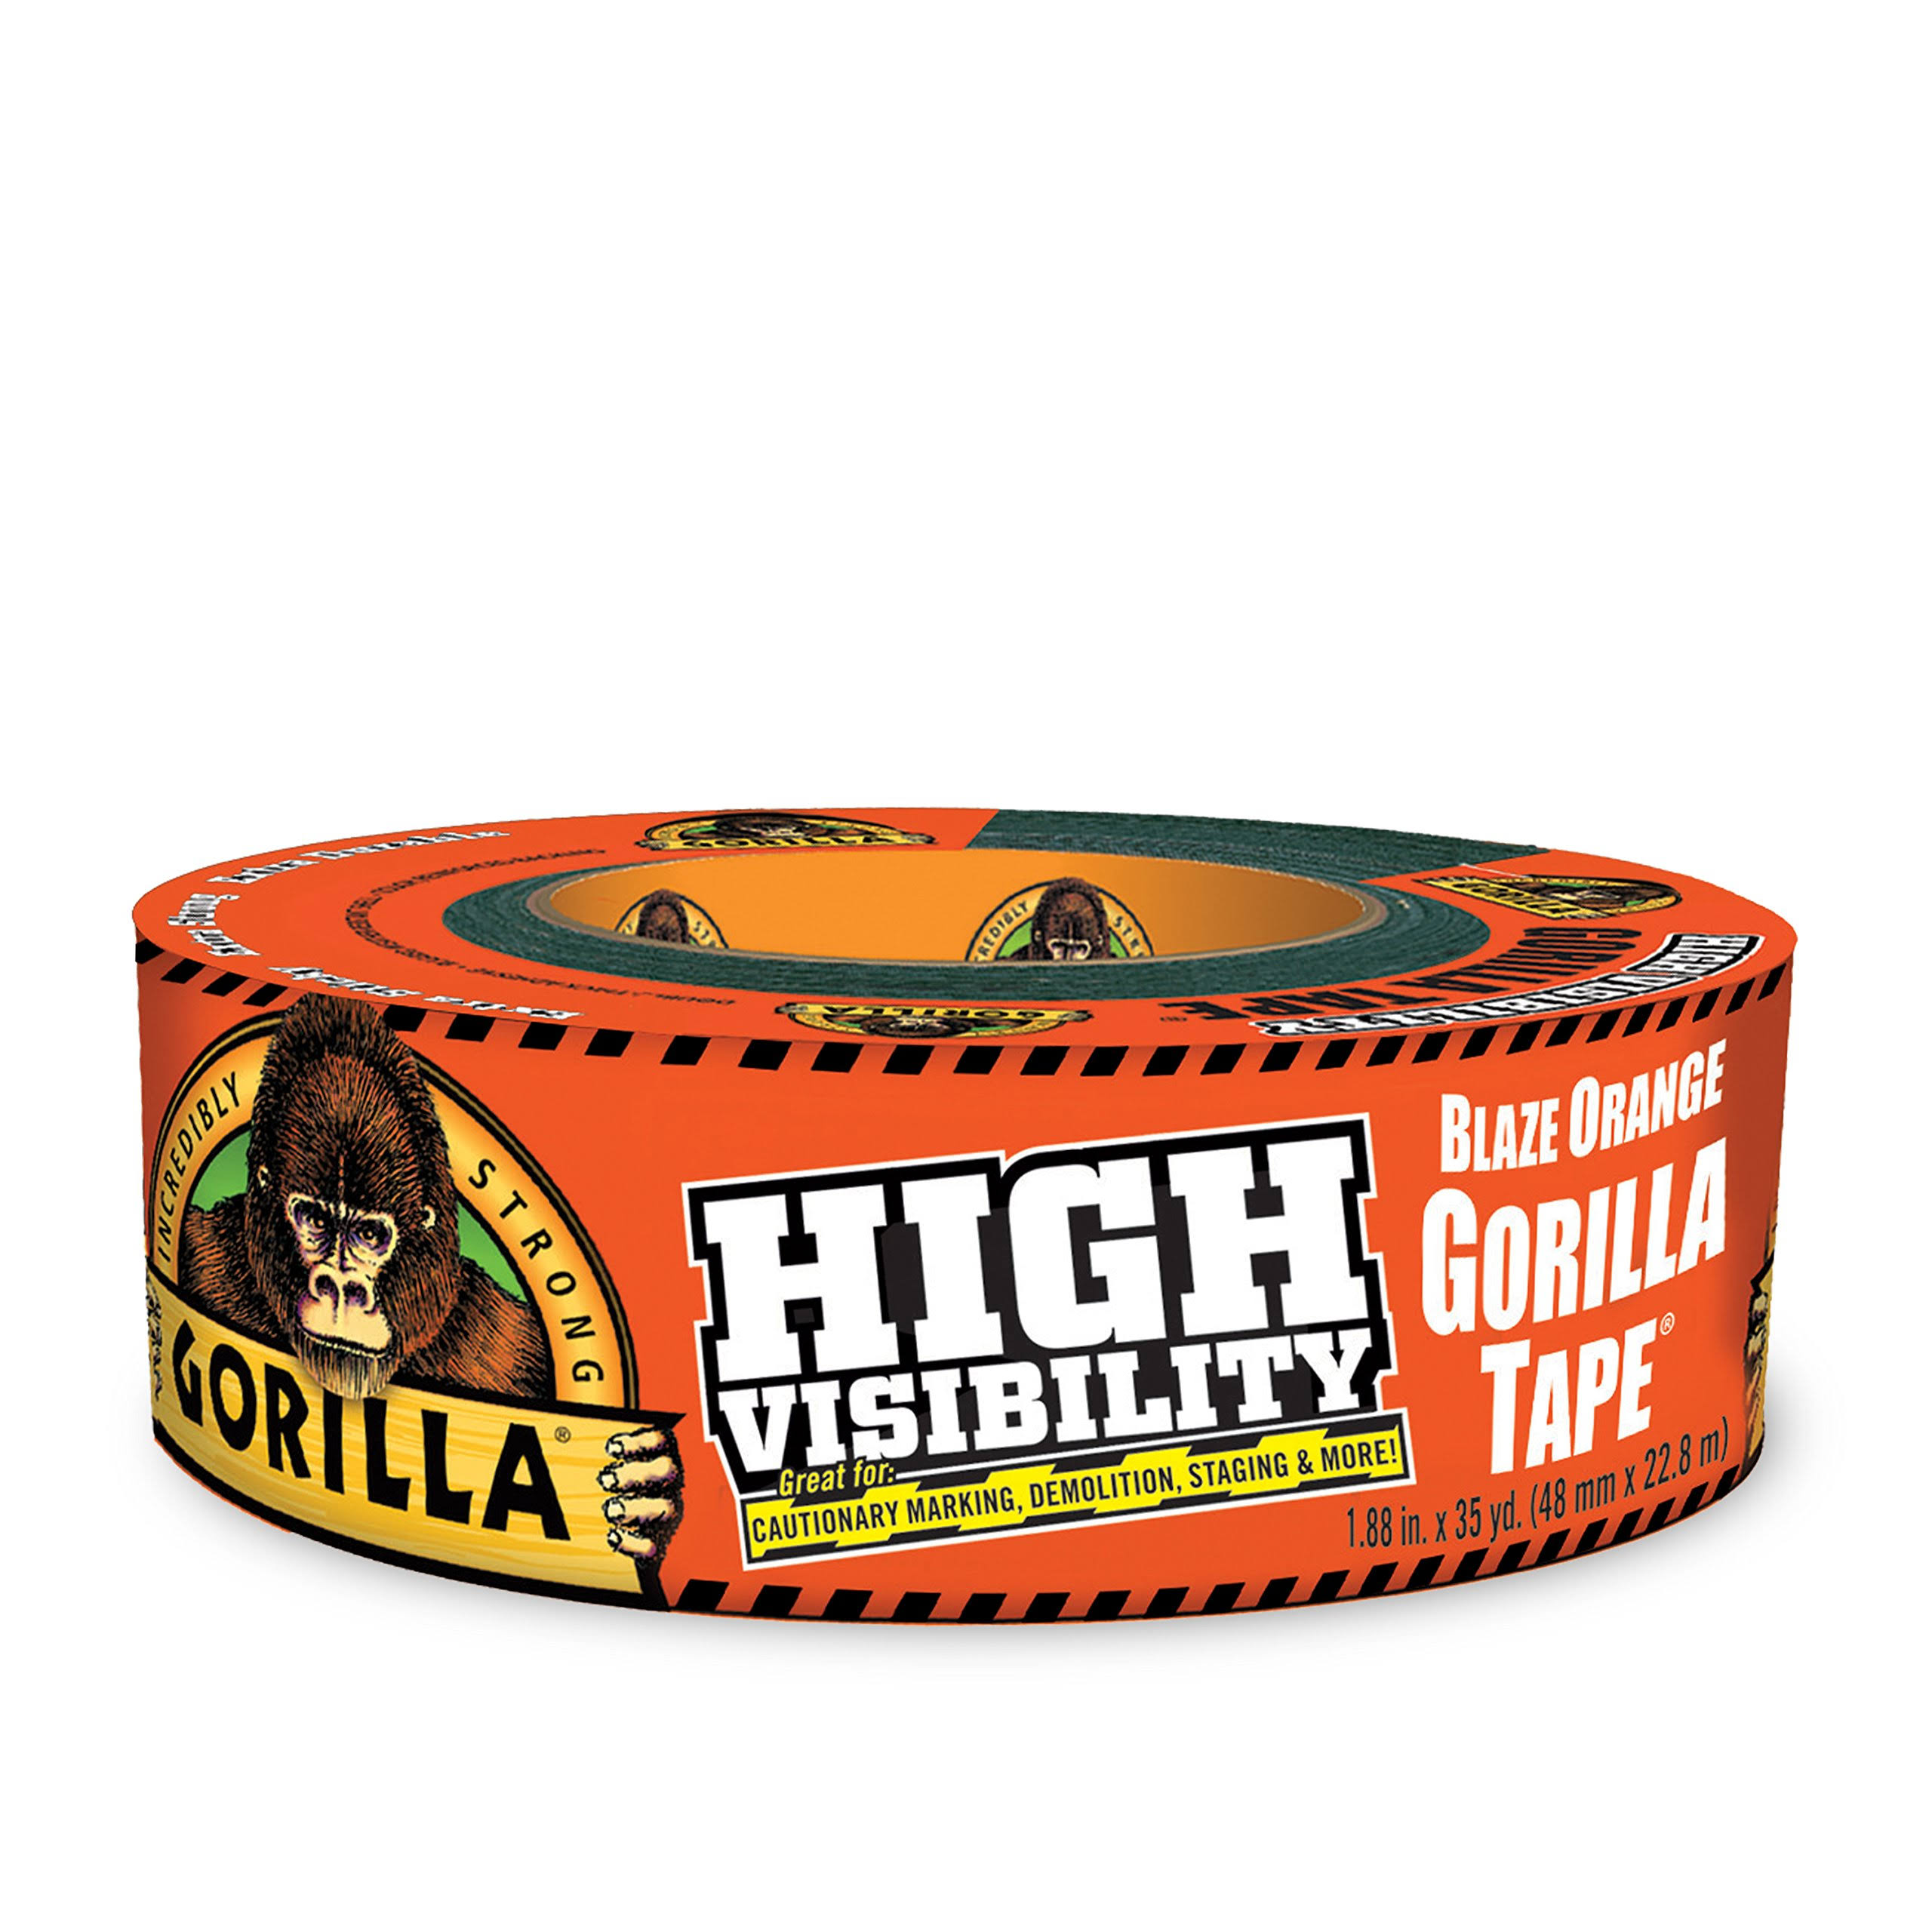 Gorilla High Visibility Tape Duct Tape - Blaze Orange, 1.88" x 35yds